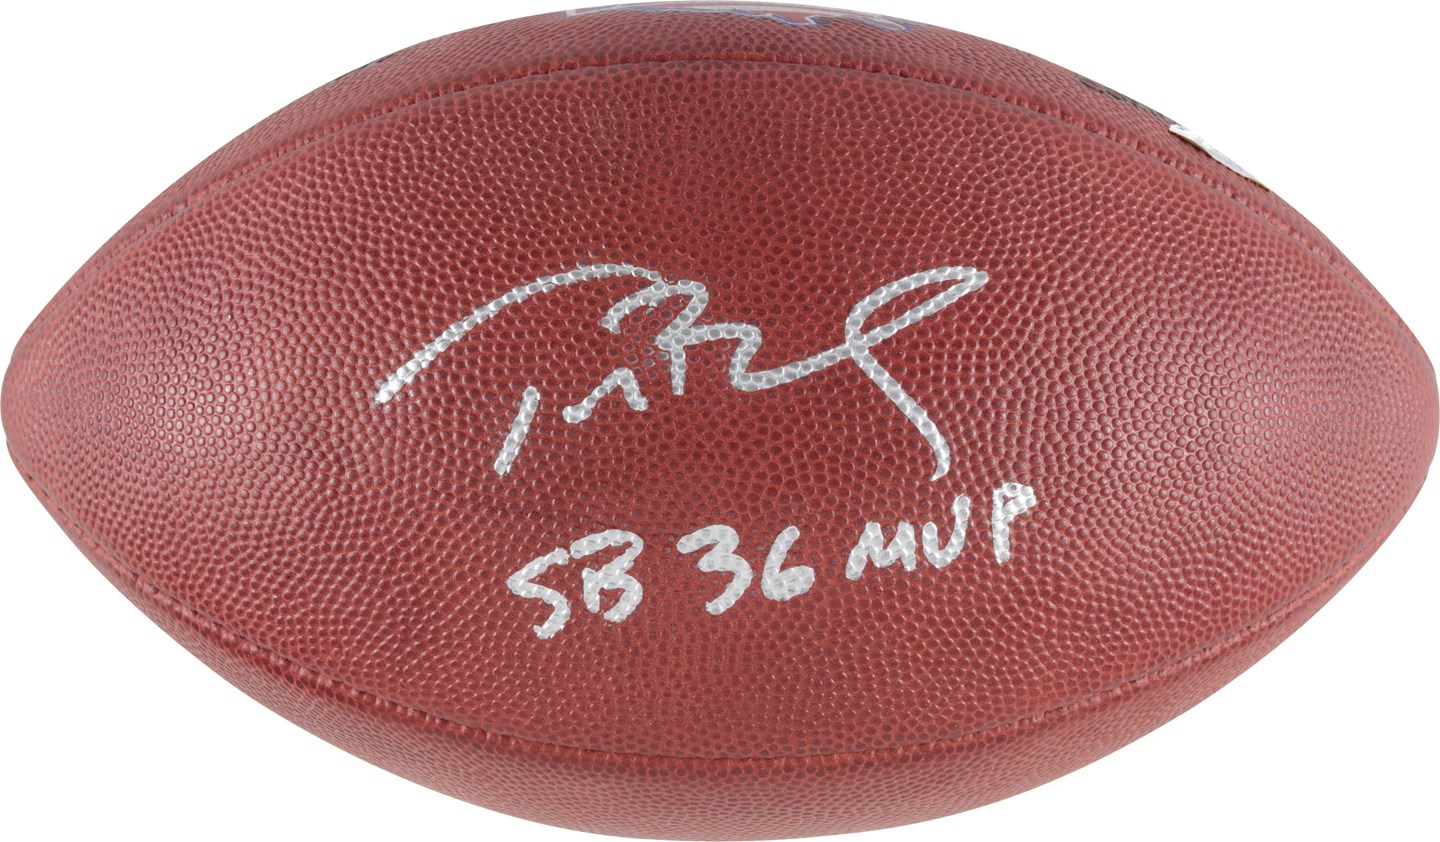 Tom Brady Super Bowl Football Collection - 2002 Tom Brady Signed Inscribed "SB 36 MVP" Super Bowl XXXVI Game Used Football - Brady's First Championship (NFL PSA & Tristar)